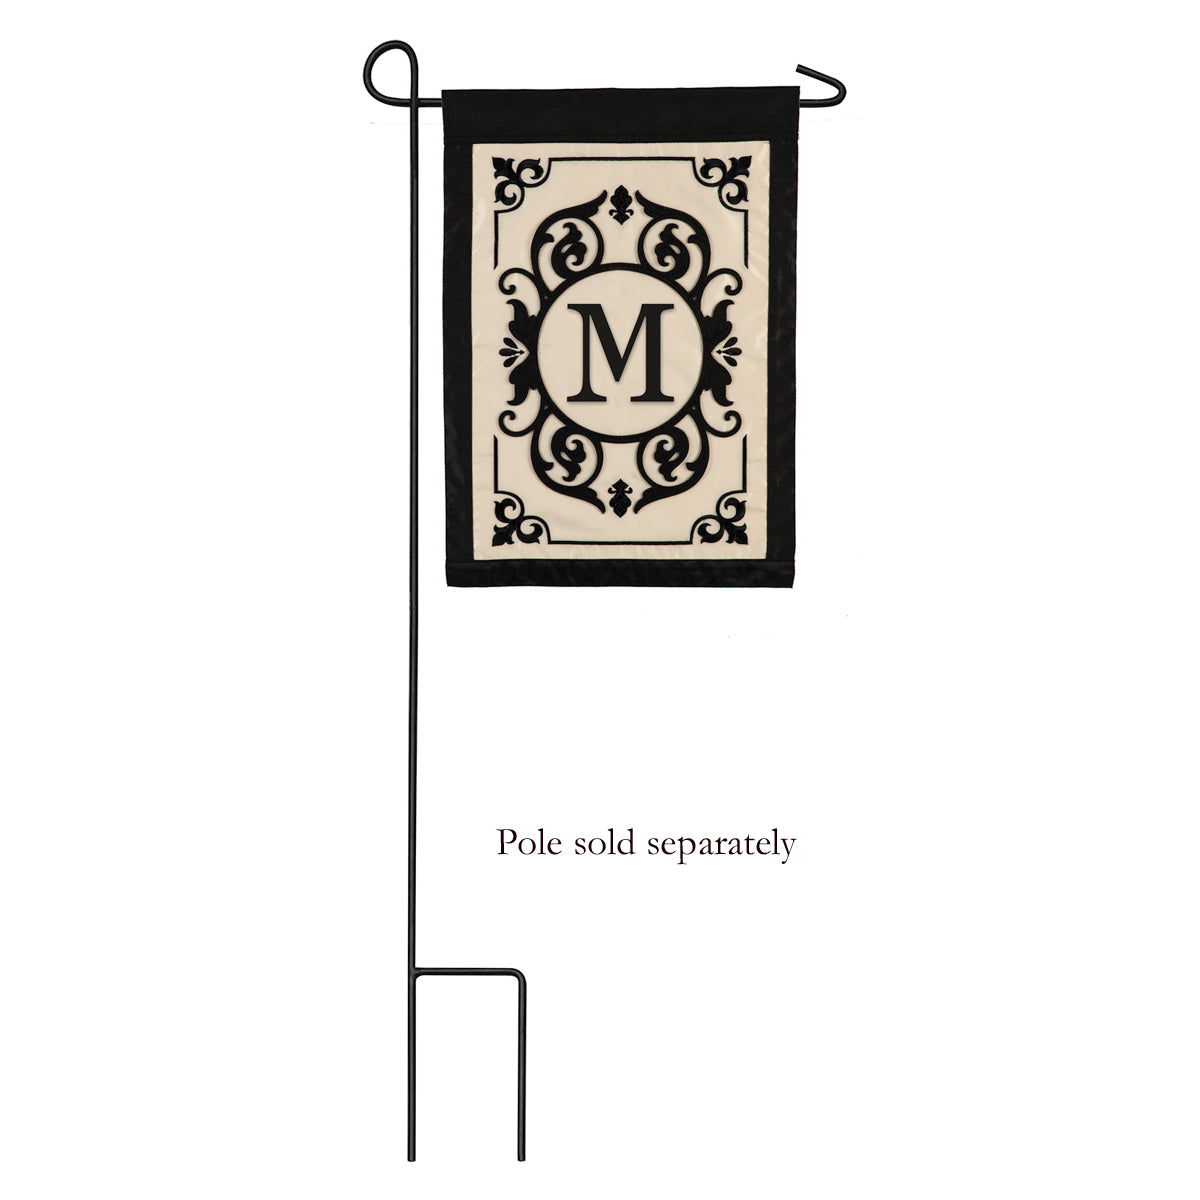 Cambridge Monogram Garden Applique Flag, "M"